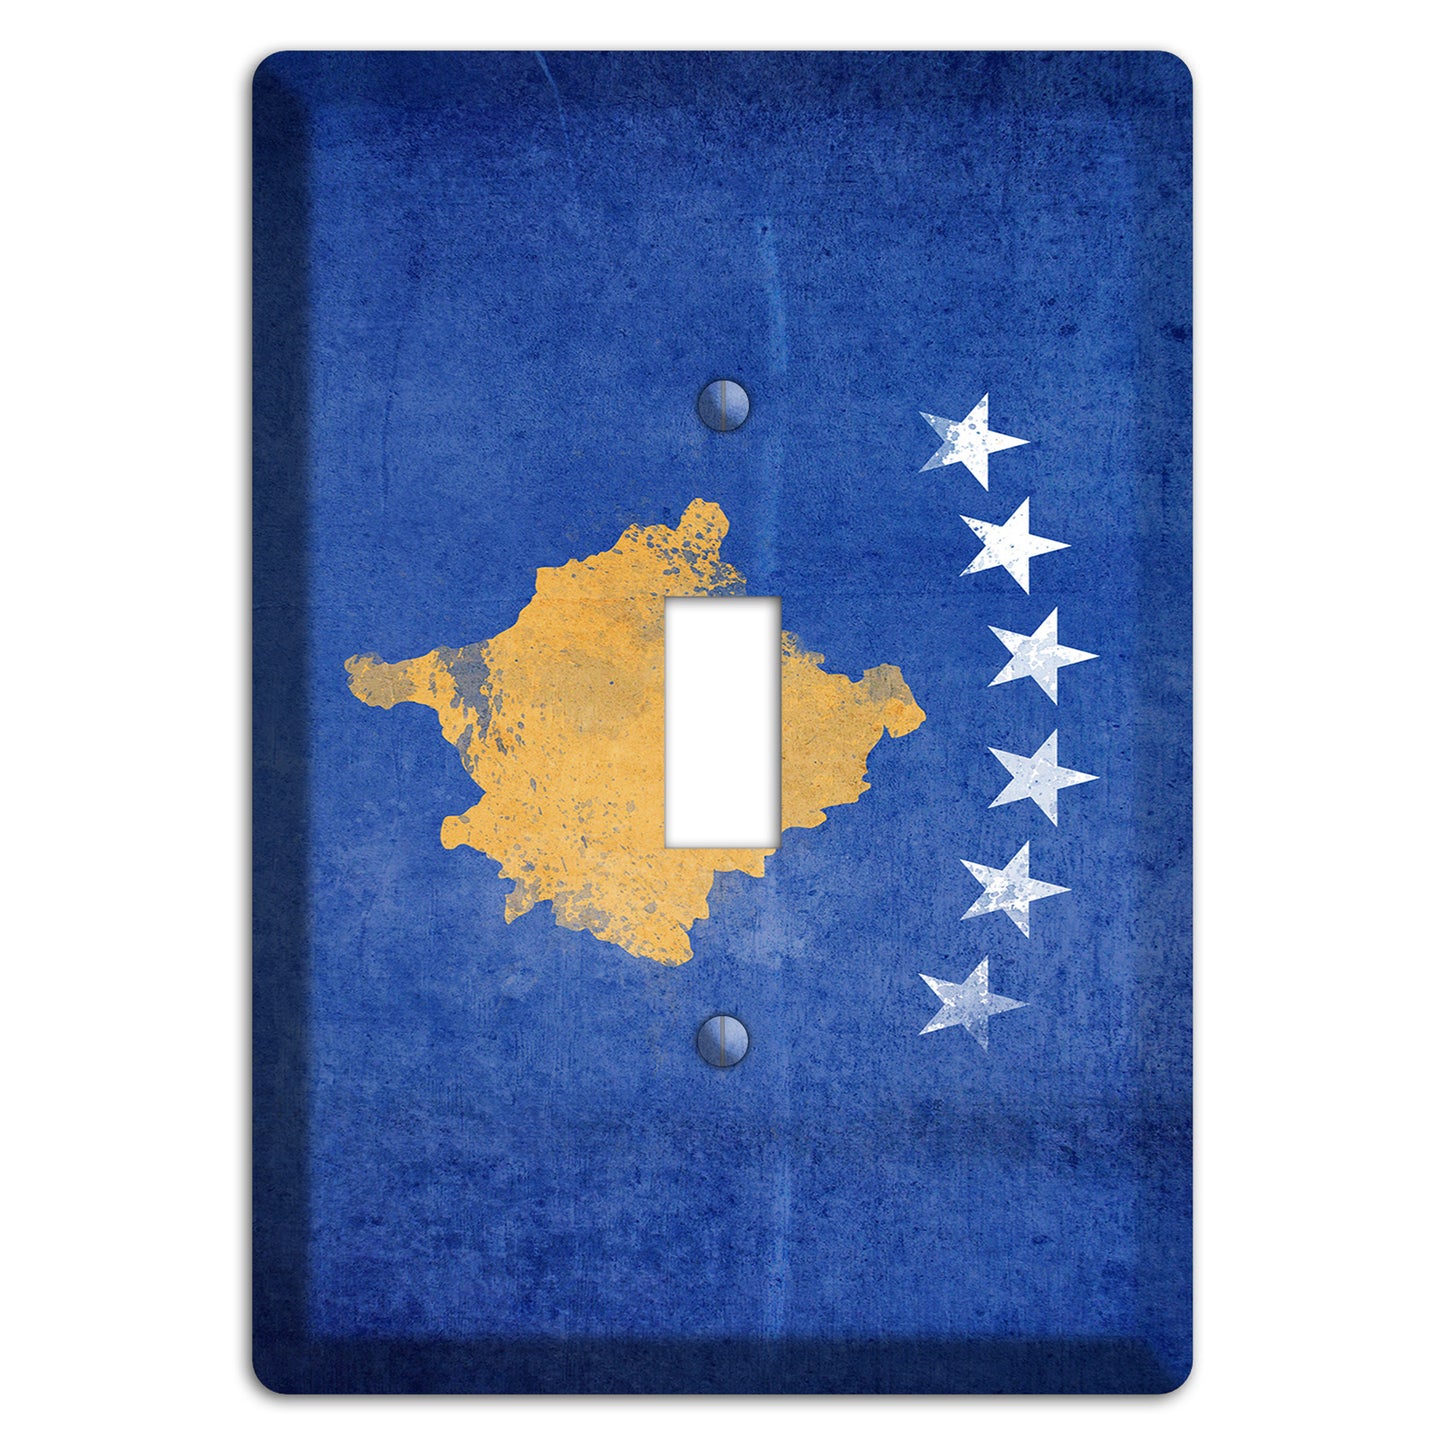 Kosovo Cover Plates Cover Plates